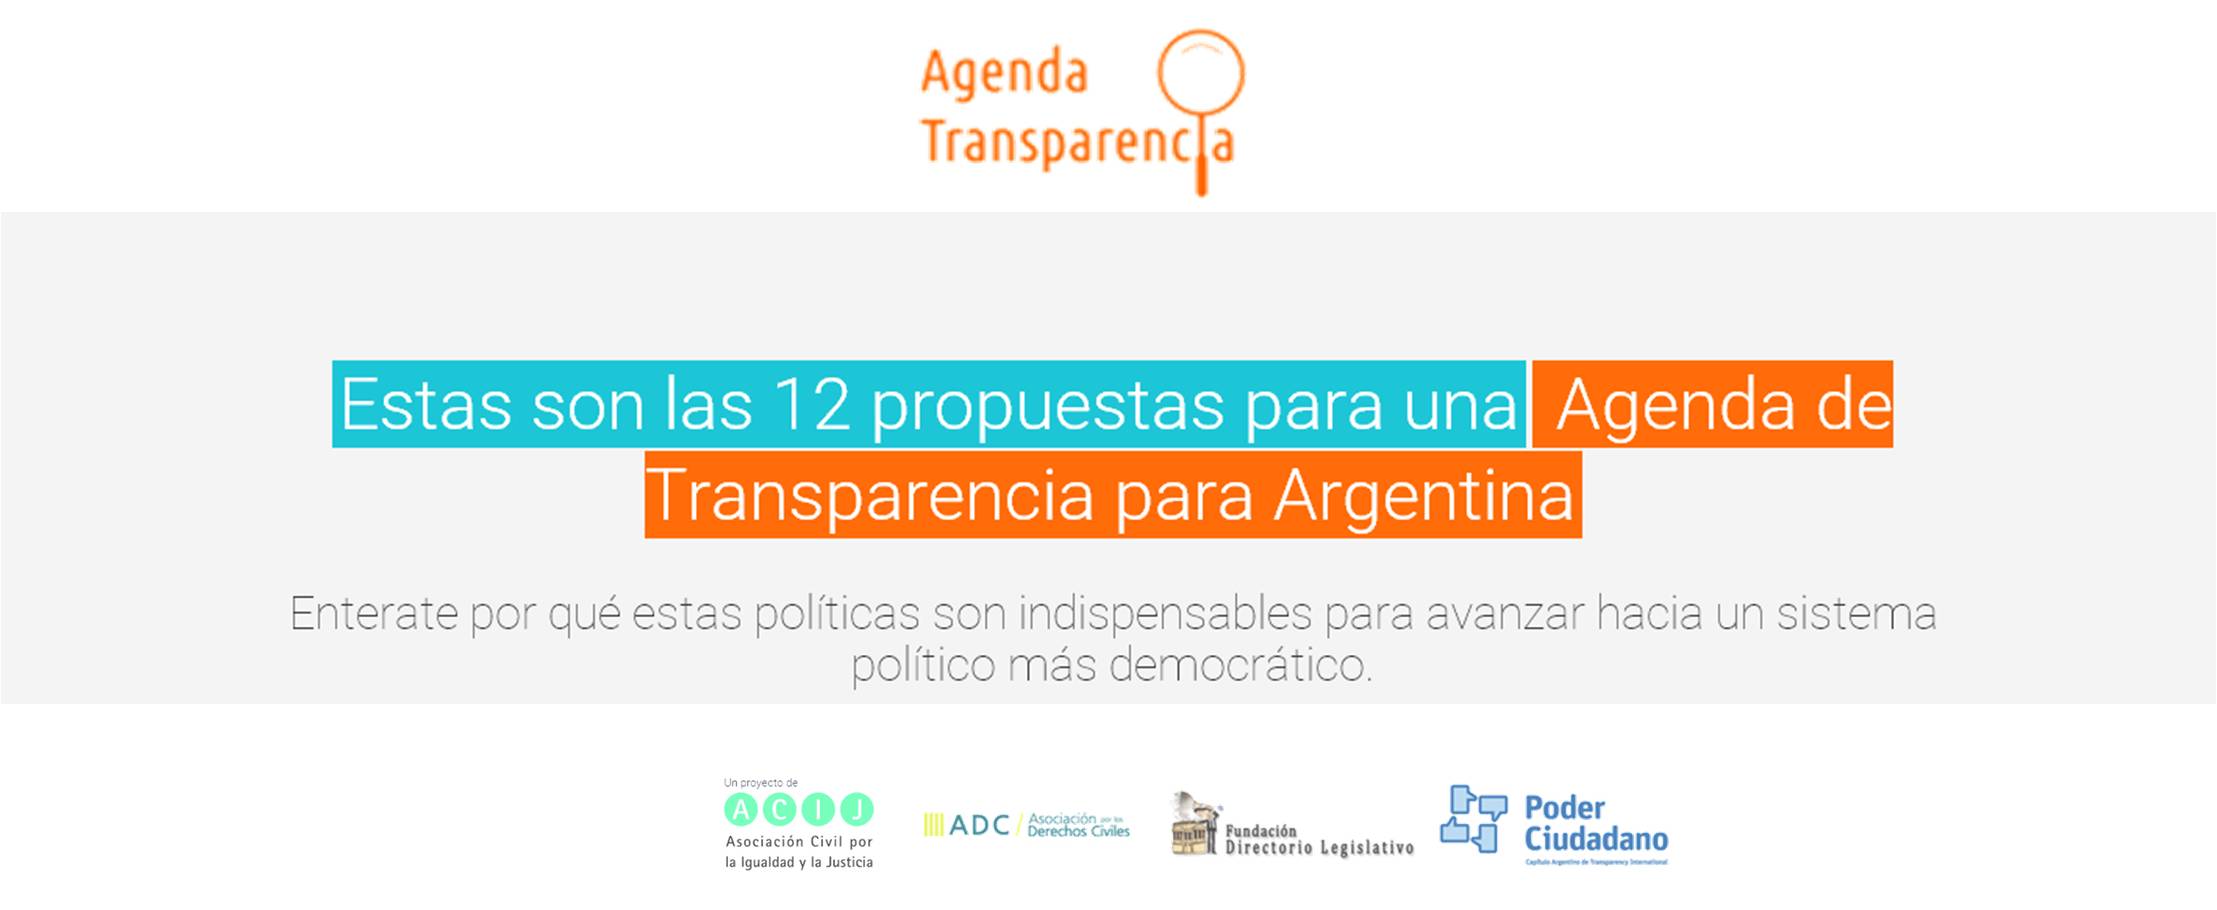 Agenda transparencia flyer